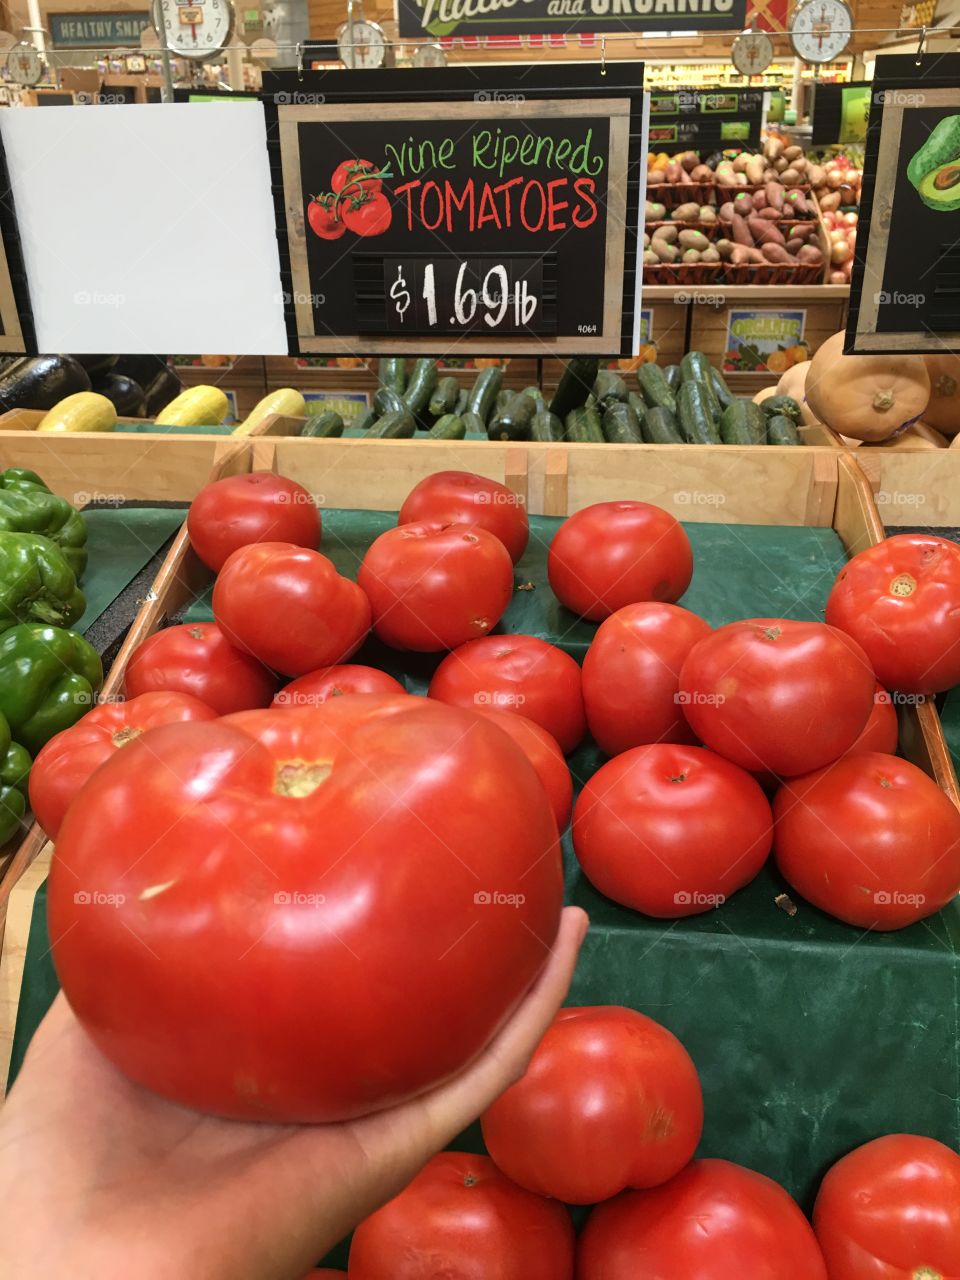 Huge tomato found 